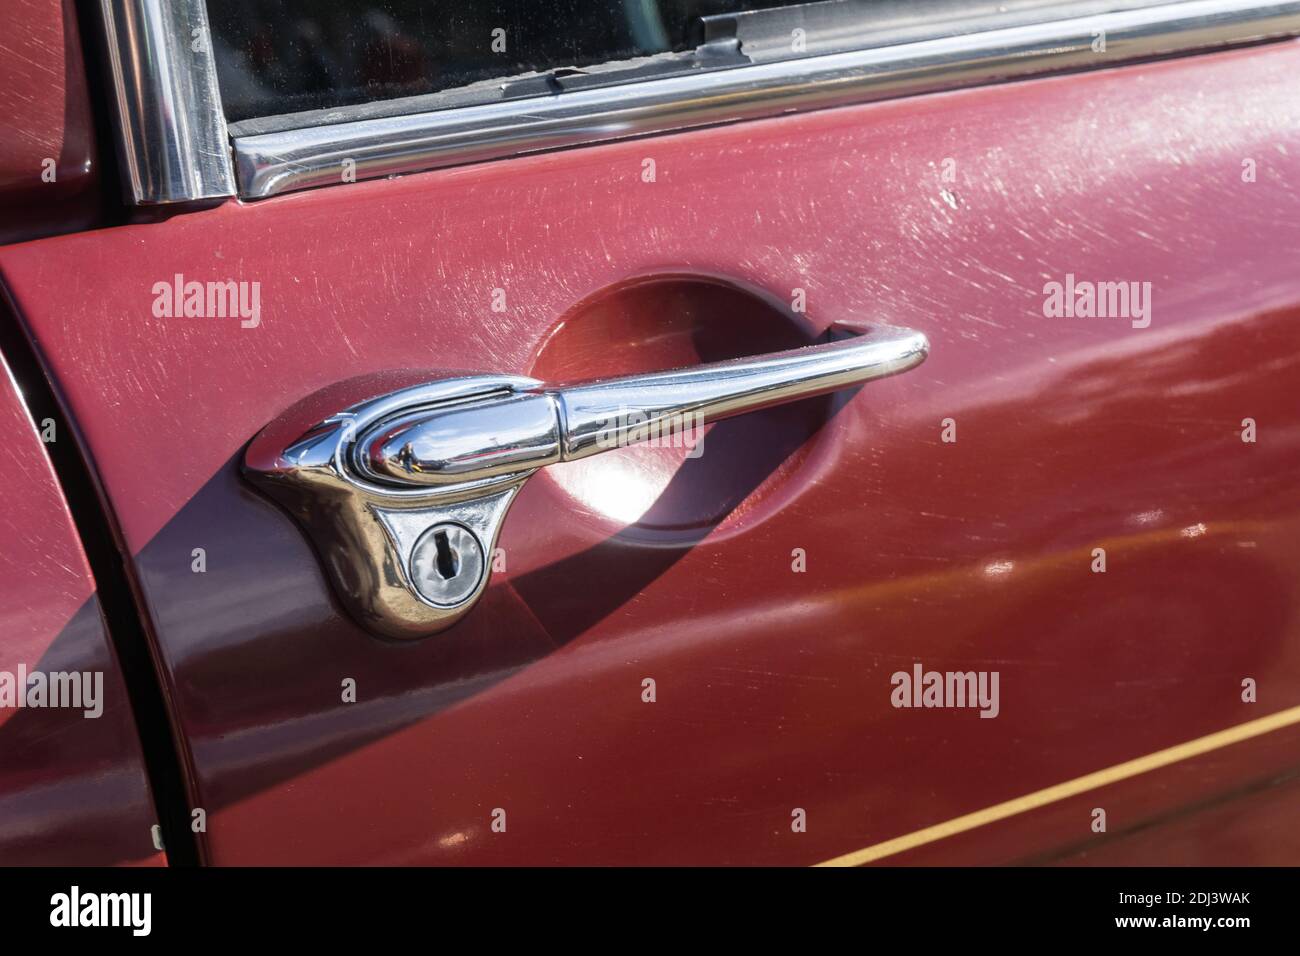 Close up detail of the chrome door handle on a maroon Vanden Plas Princess 1100 four-door British saloon car Stock Photo